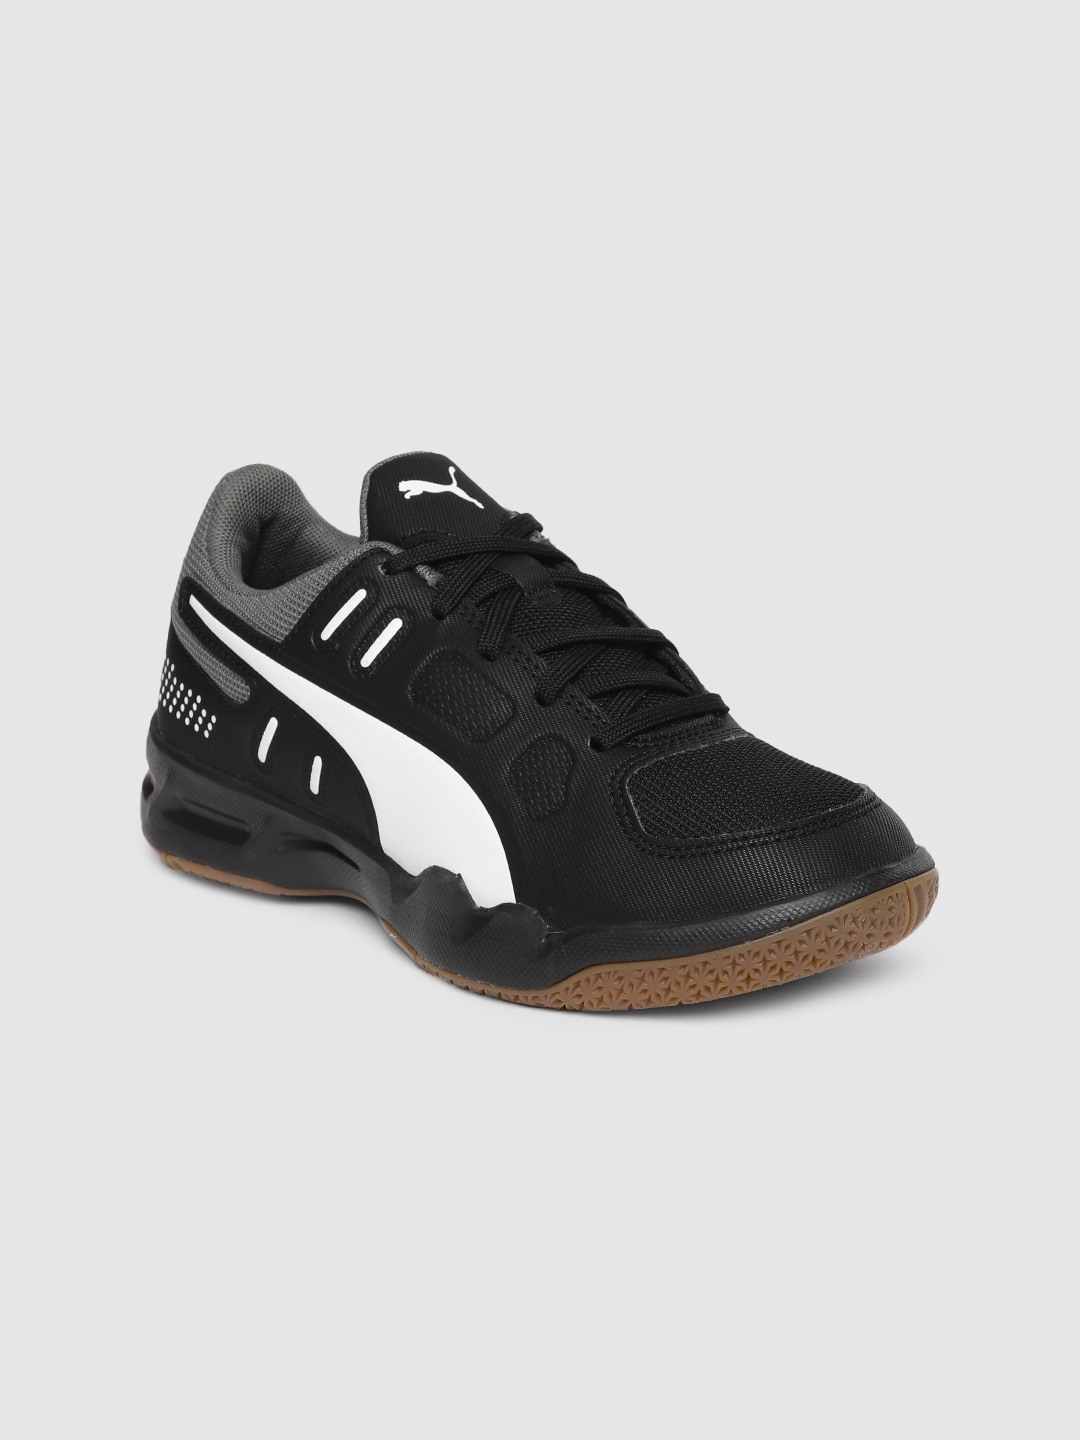 Puma Unisex Black Auriz Youth Badminton Shoes